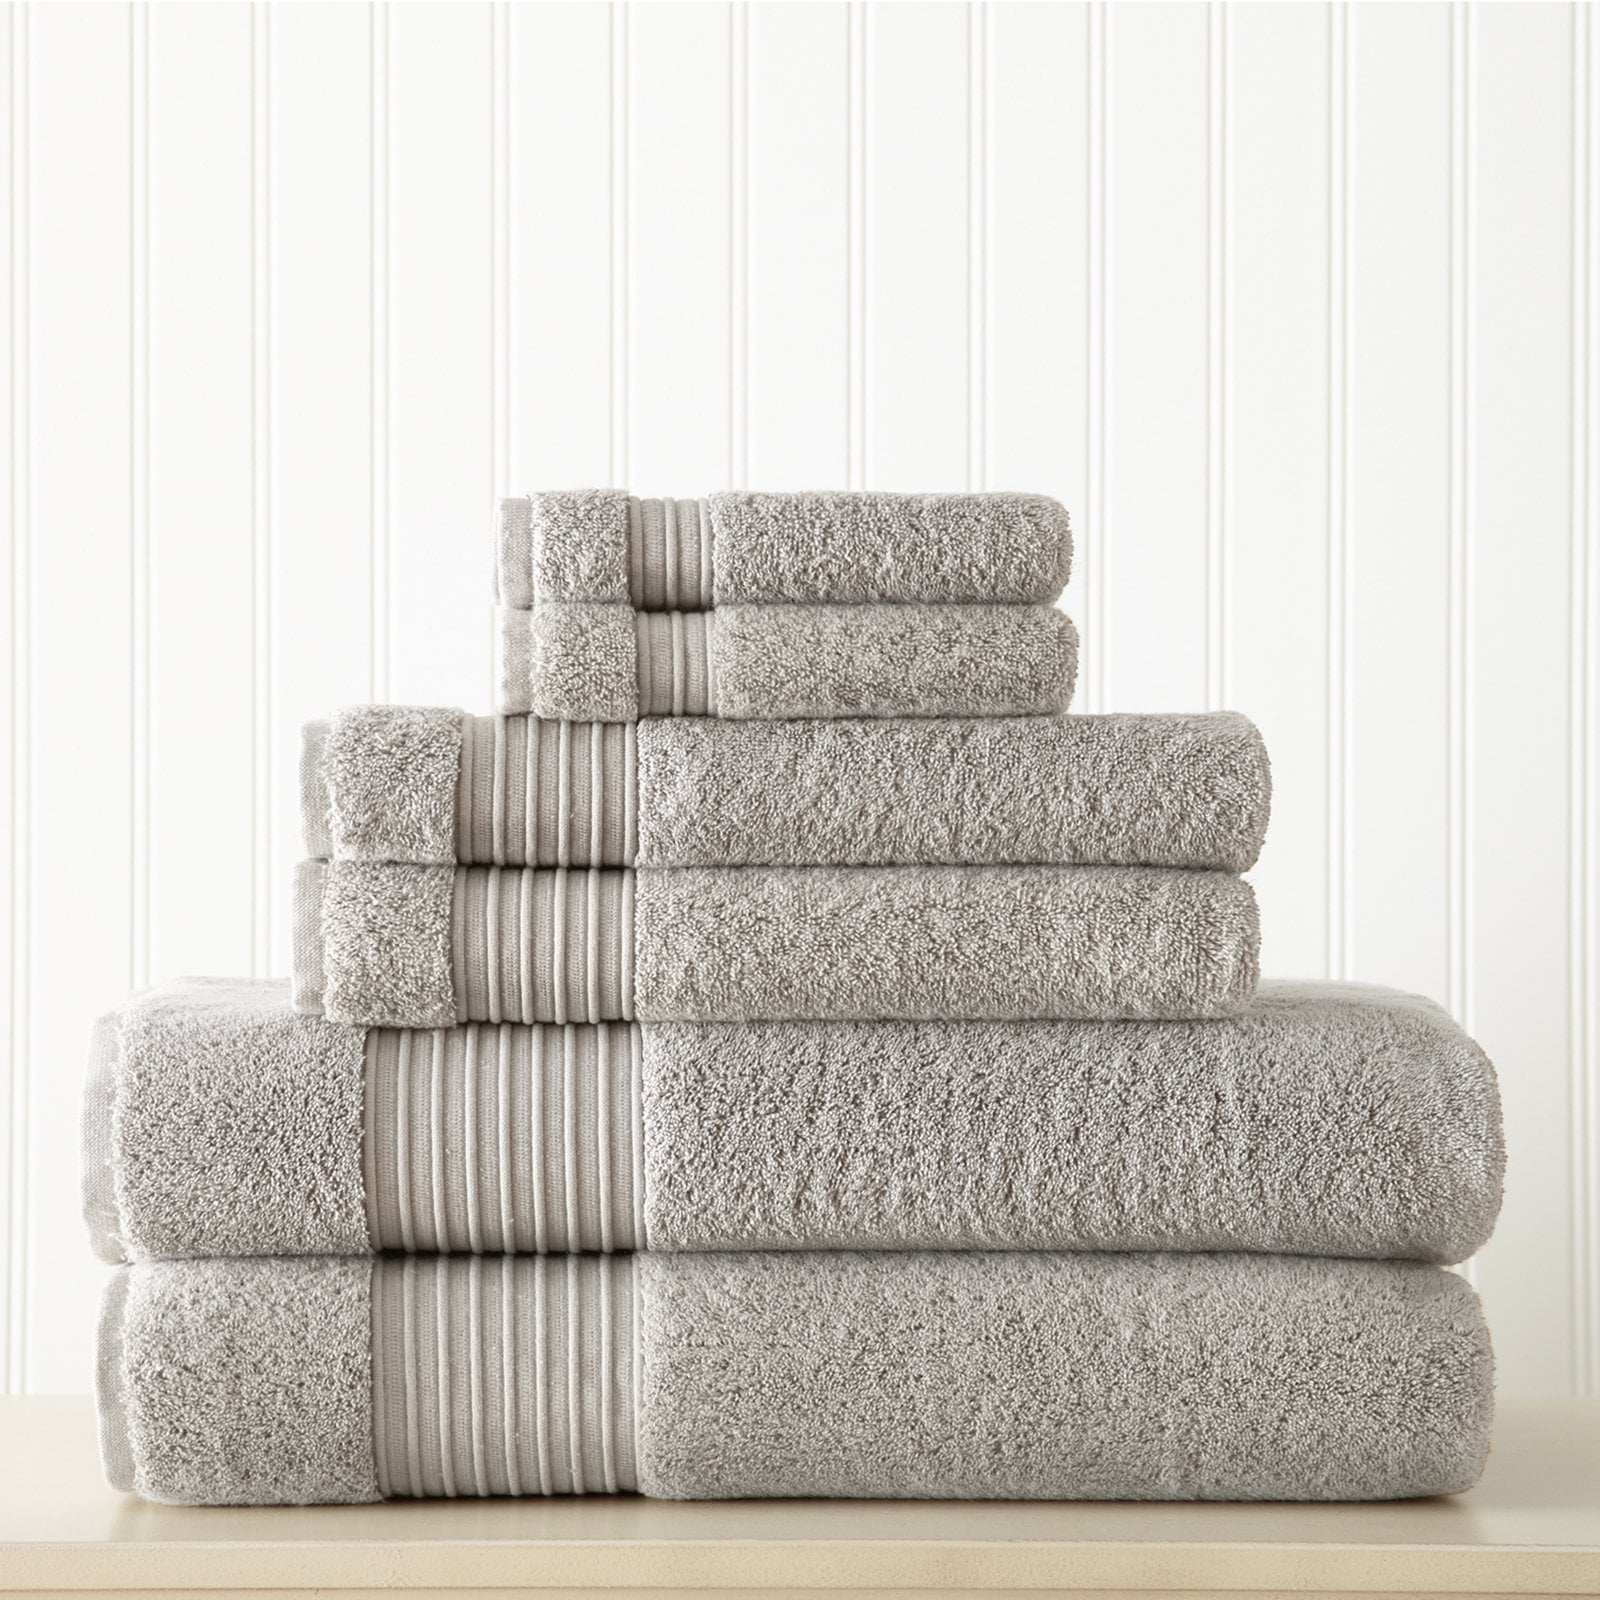 Details about   La Serna 6 Piece Towel Set Ultra Soft Luxurious Beige an Combed Cotton 650 GSM 